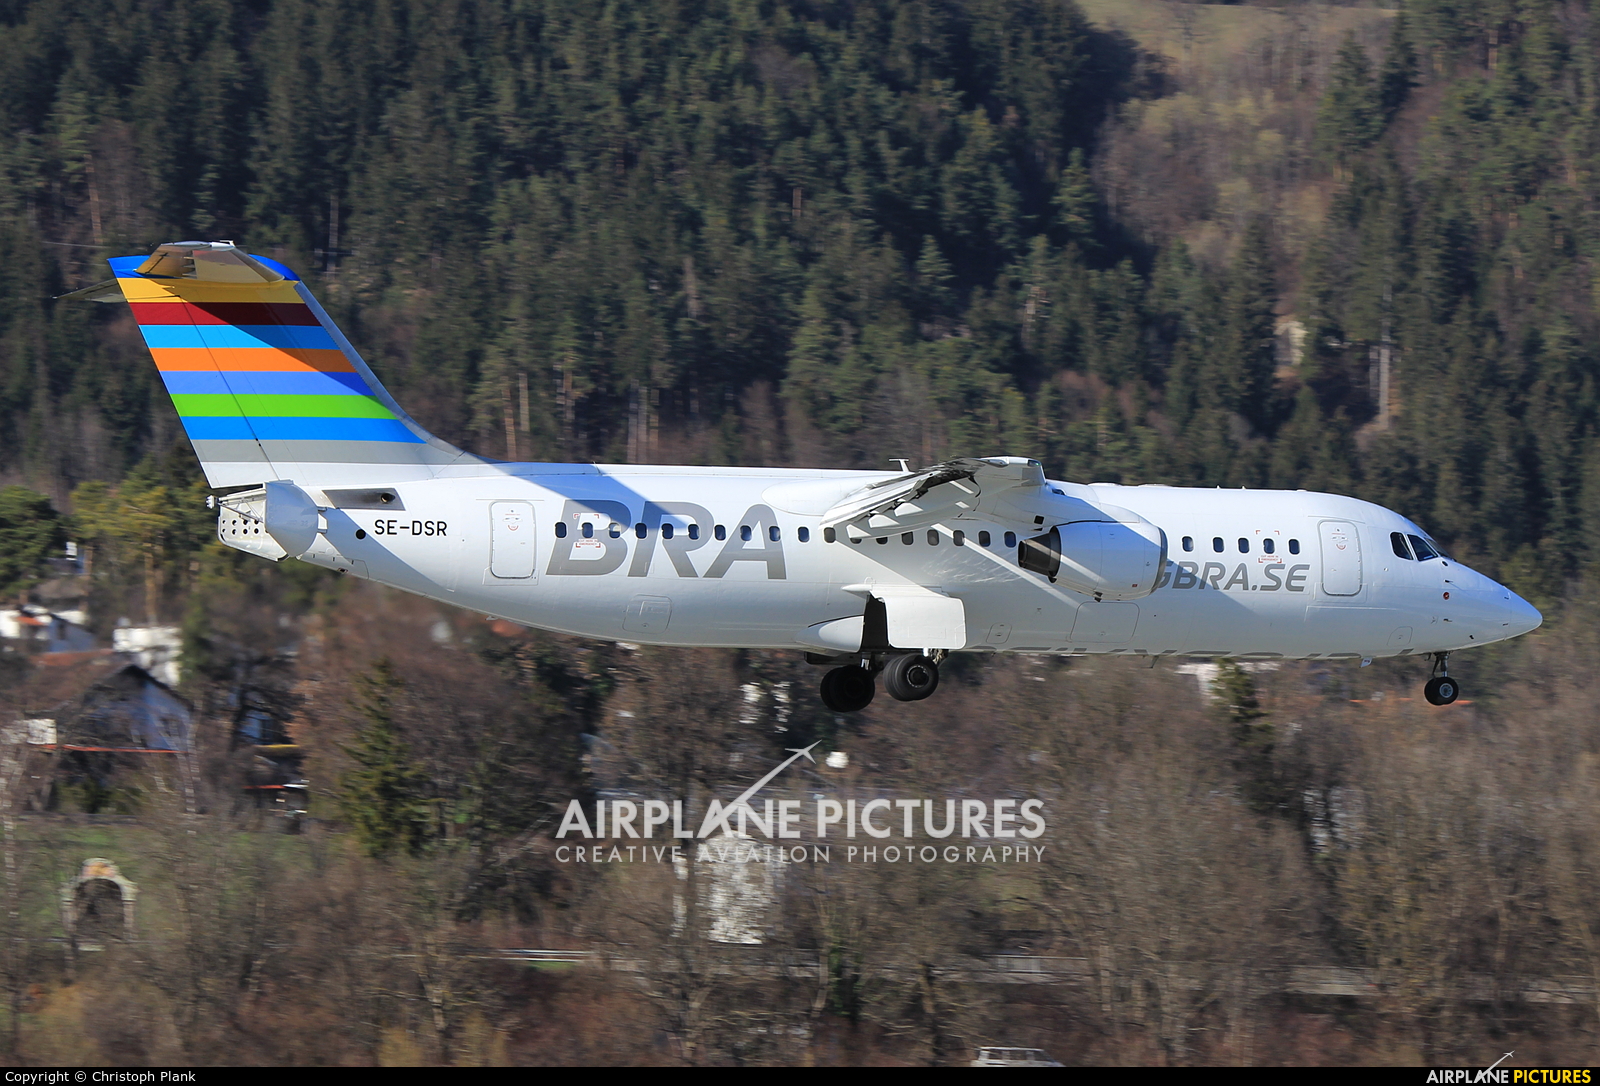 BRA (Sweden) SE-DSR aircraft at Innsbruck